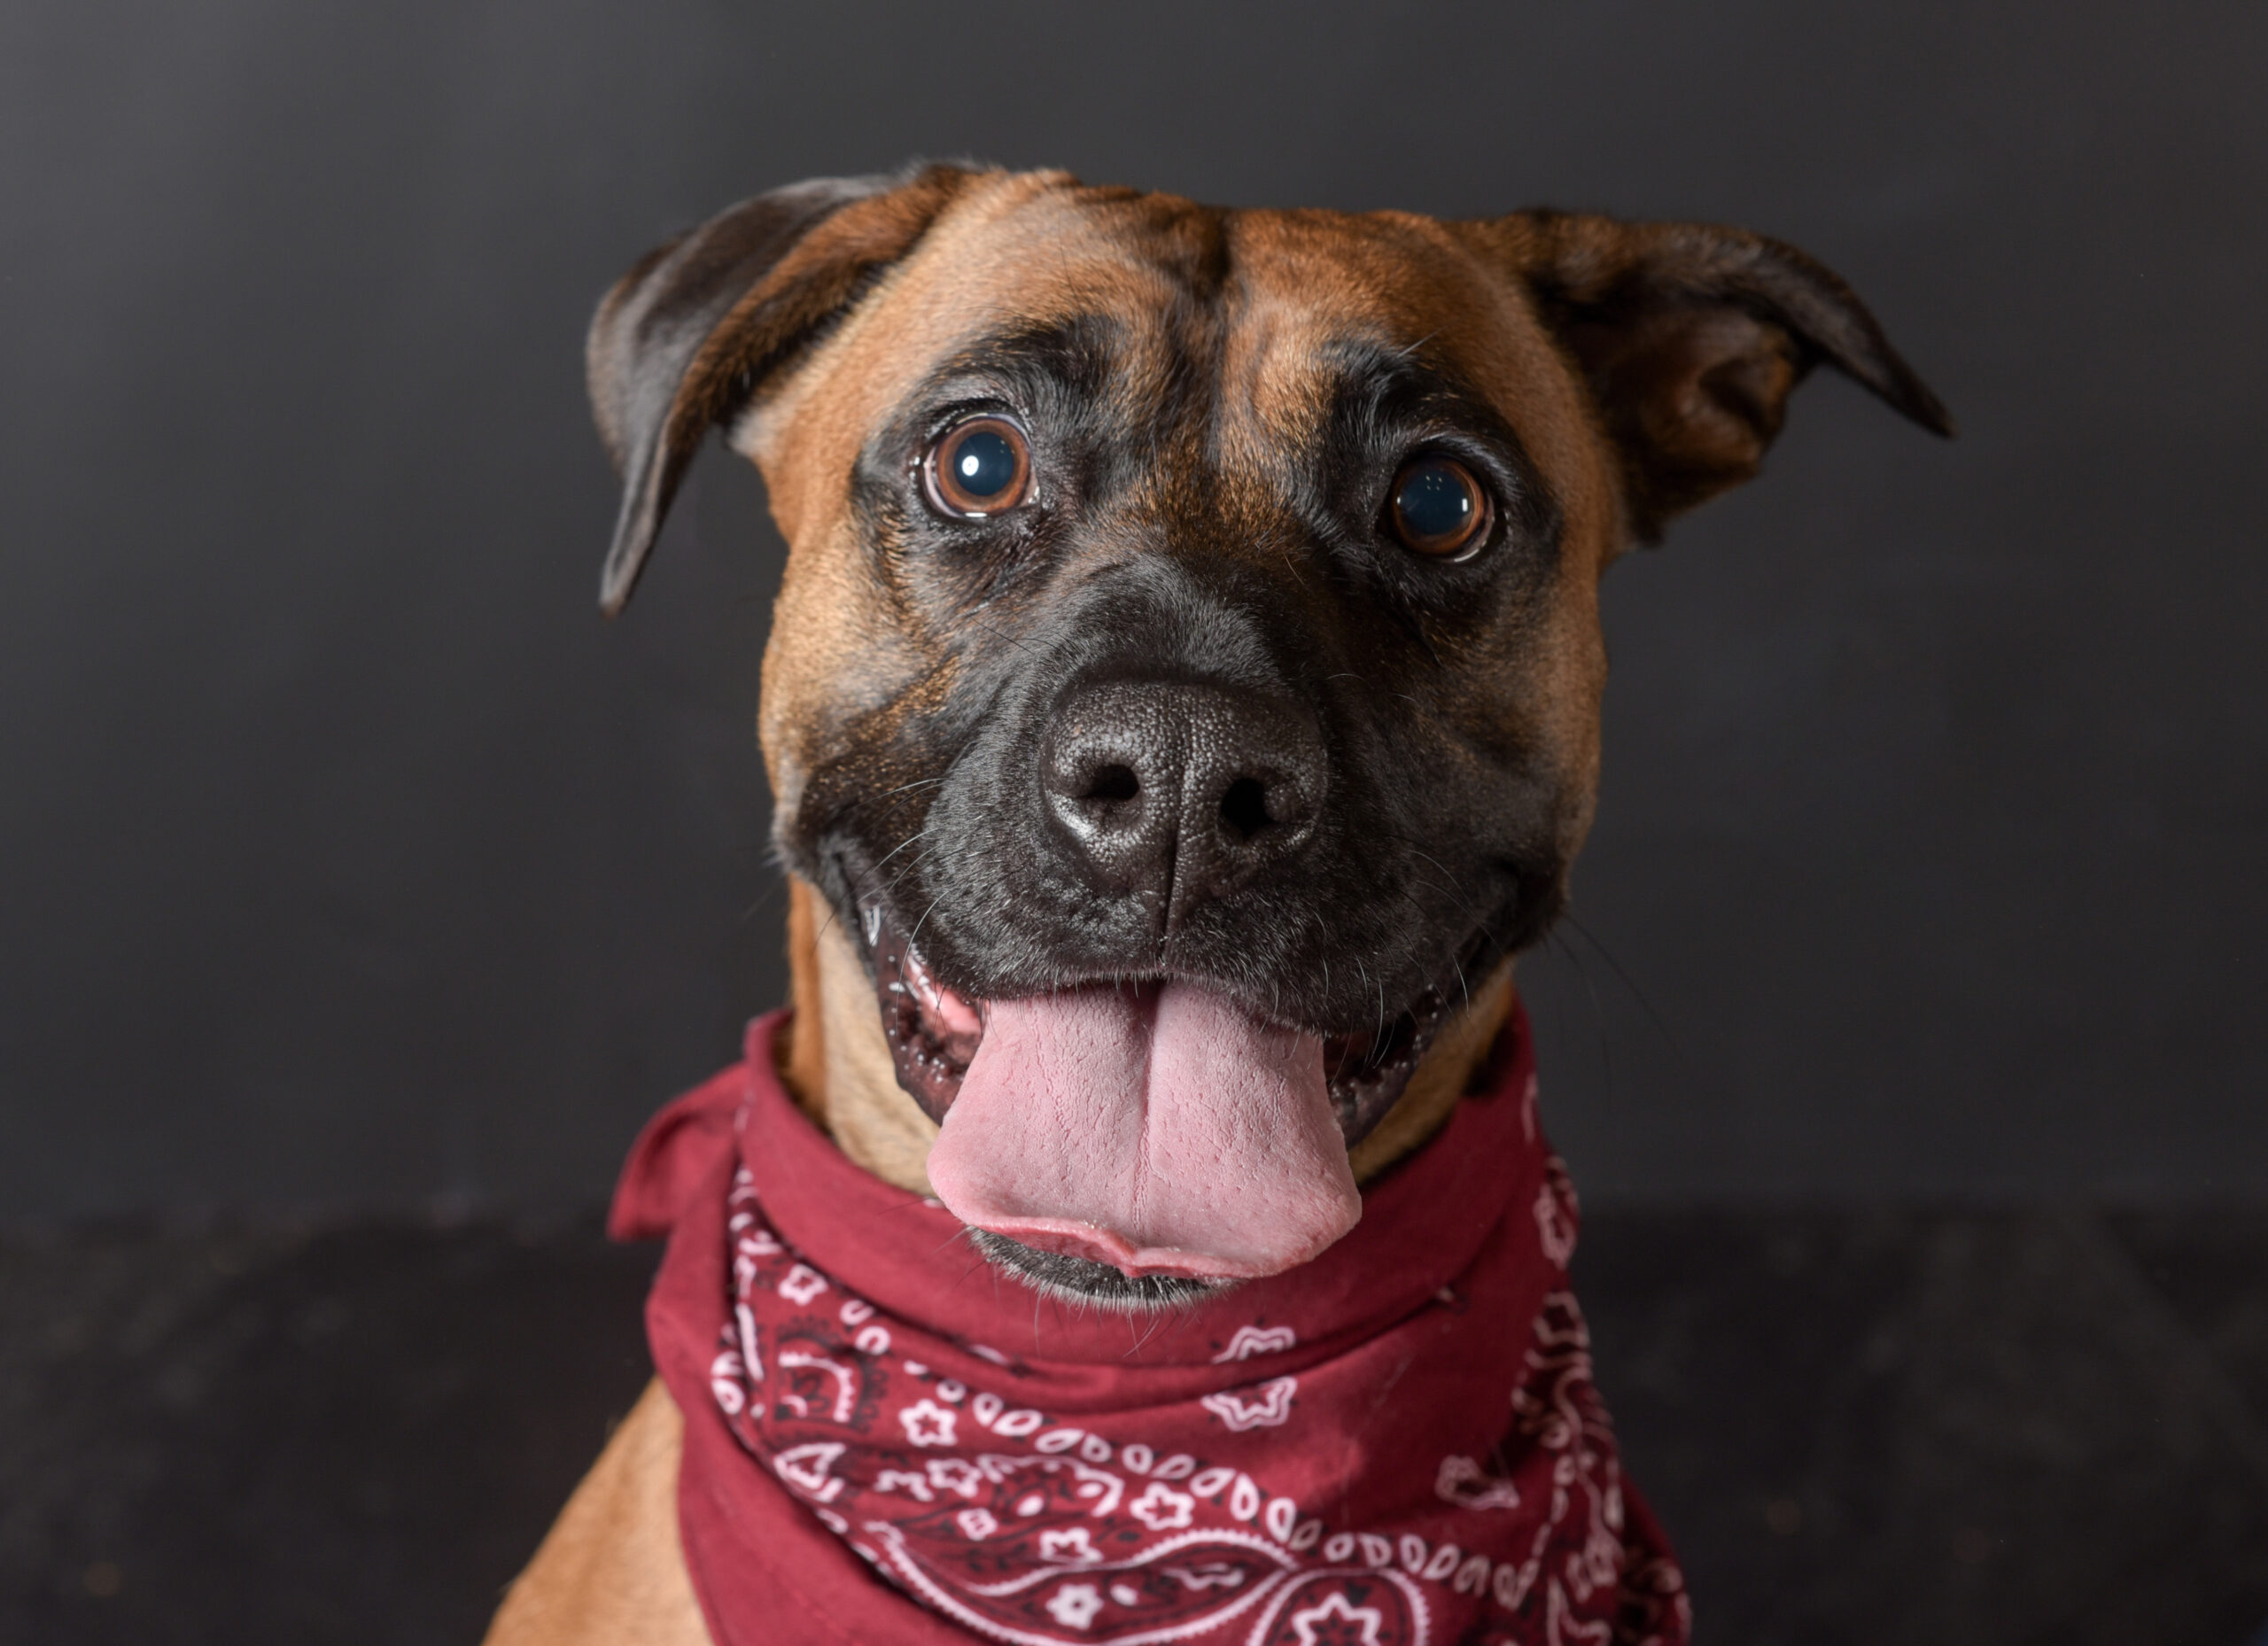 Pet Calendar Fundraiser Dog in a red bandana for Cascades Humane Society